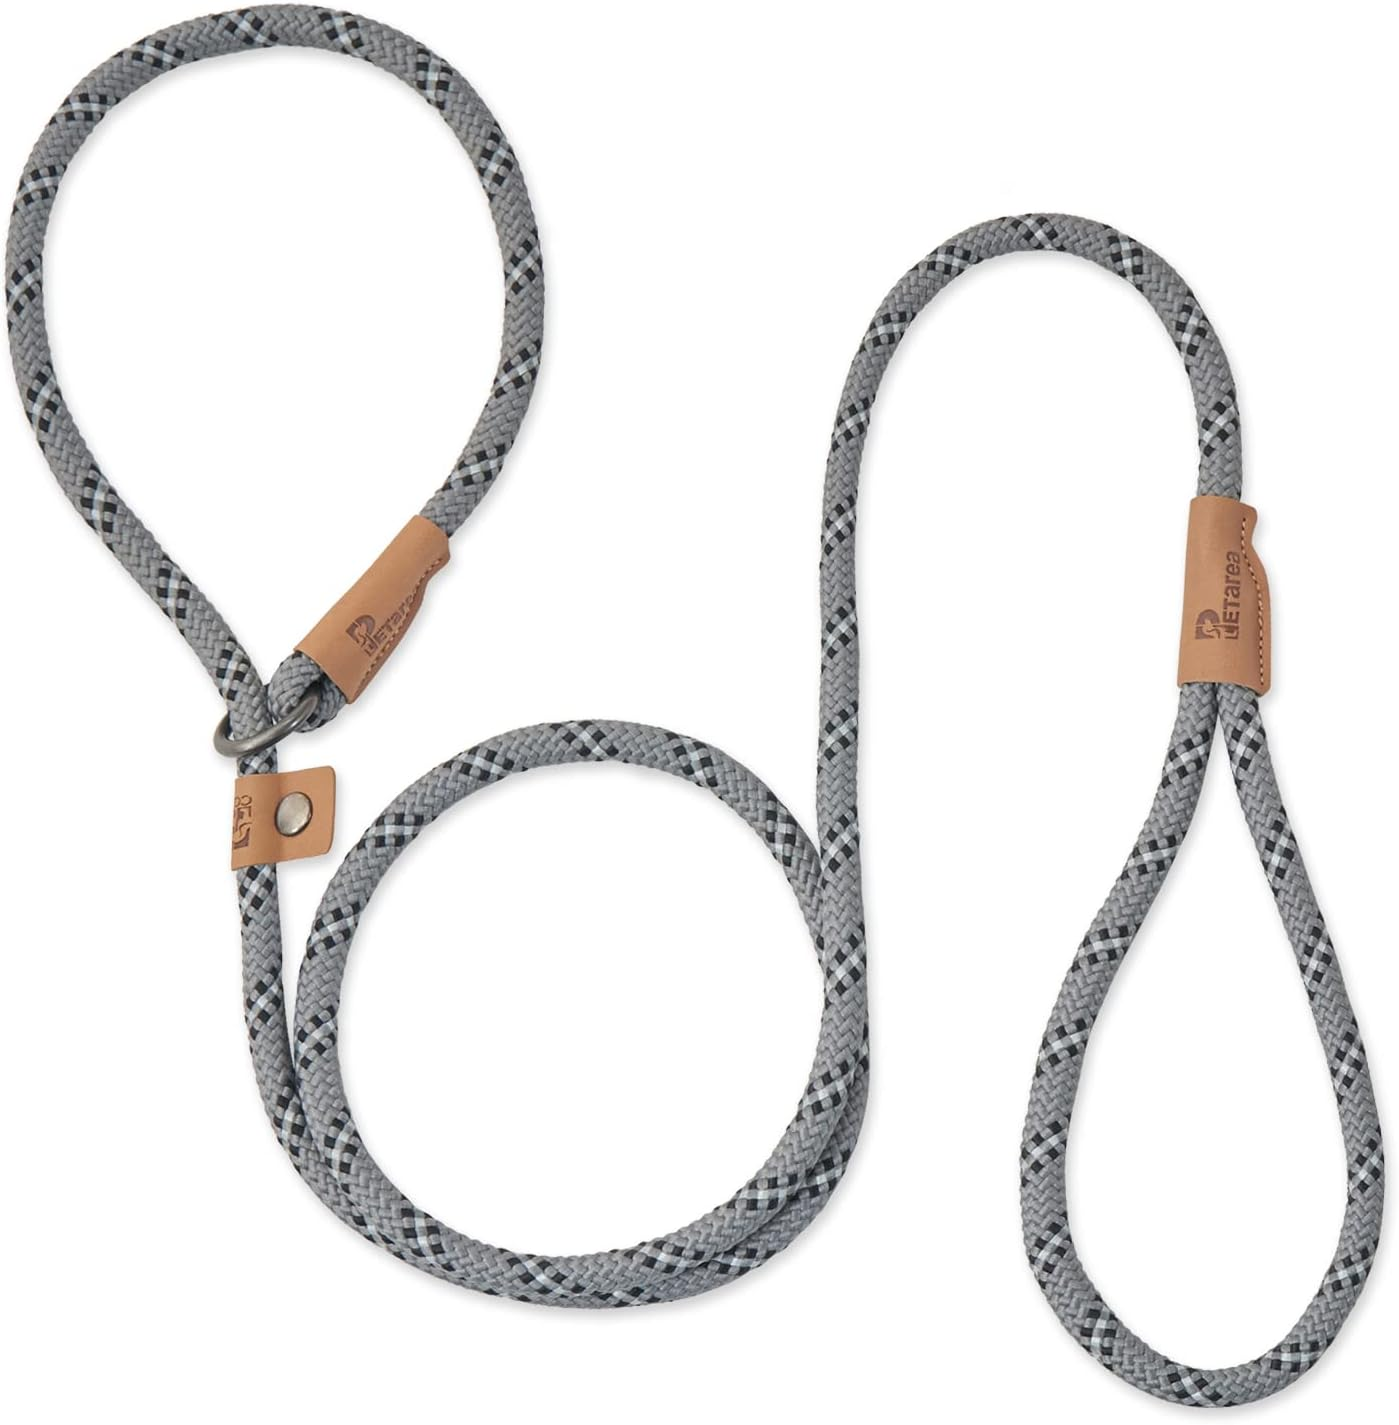 Petarea ft slip lead dog leash heavy duty rope leash for small medium large d